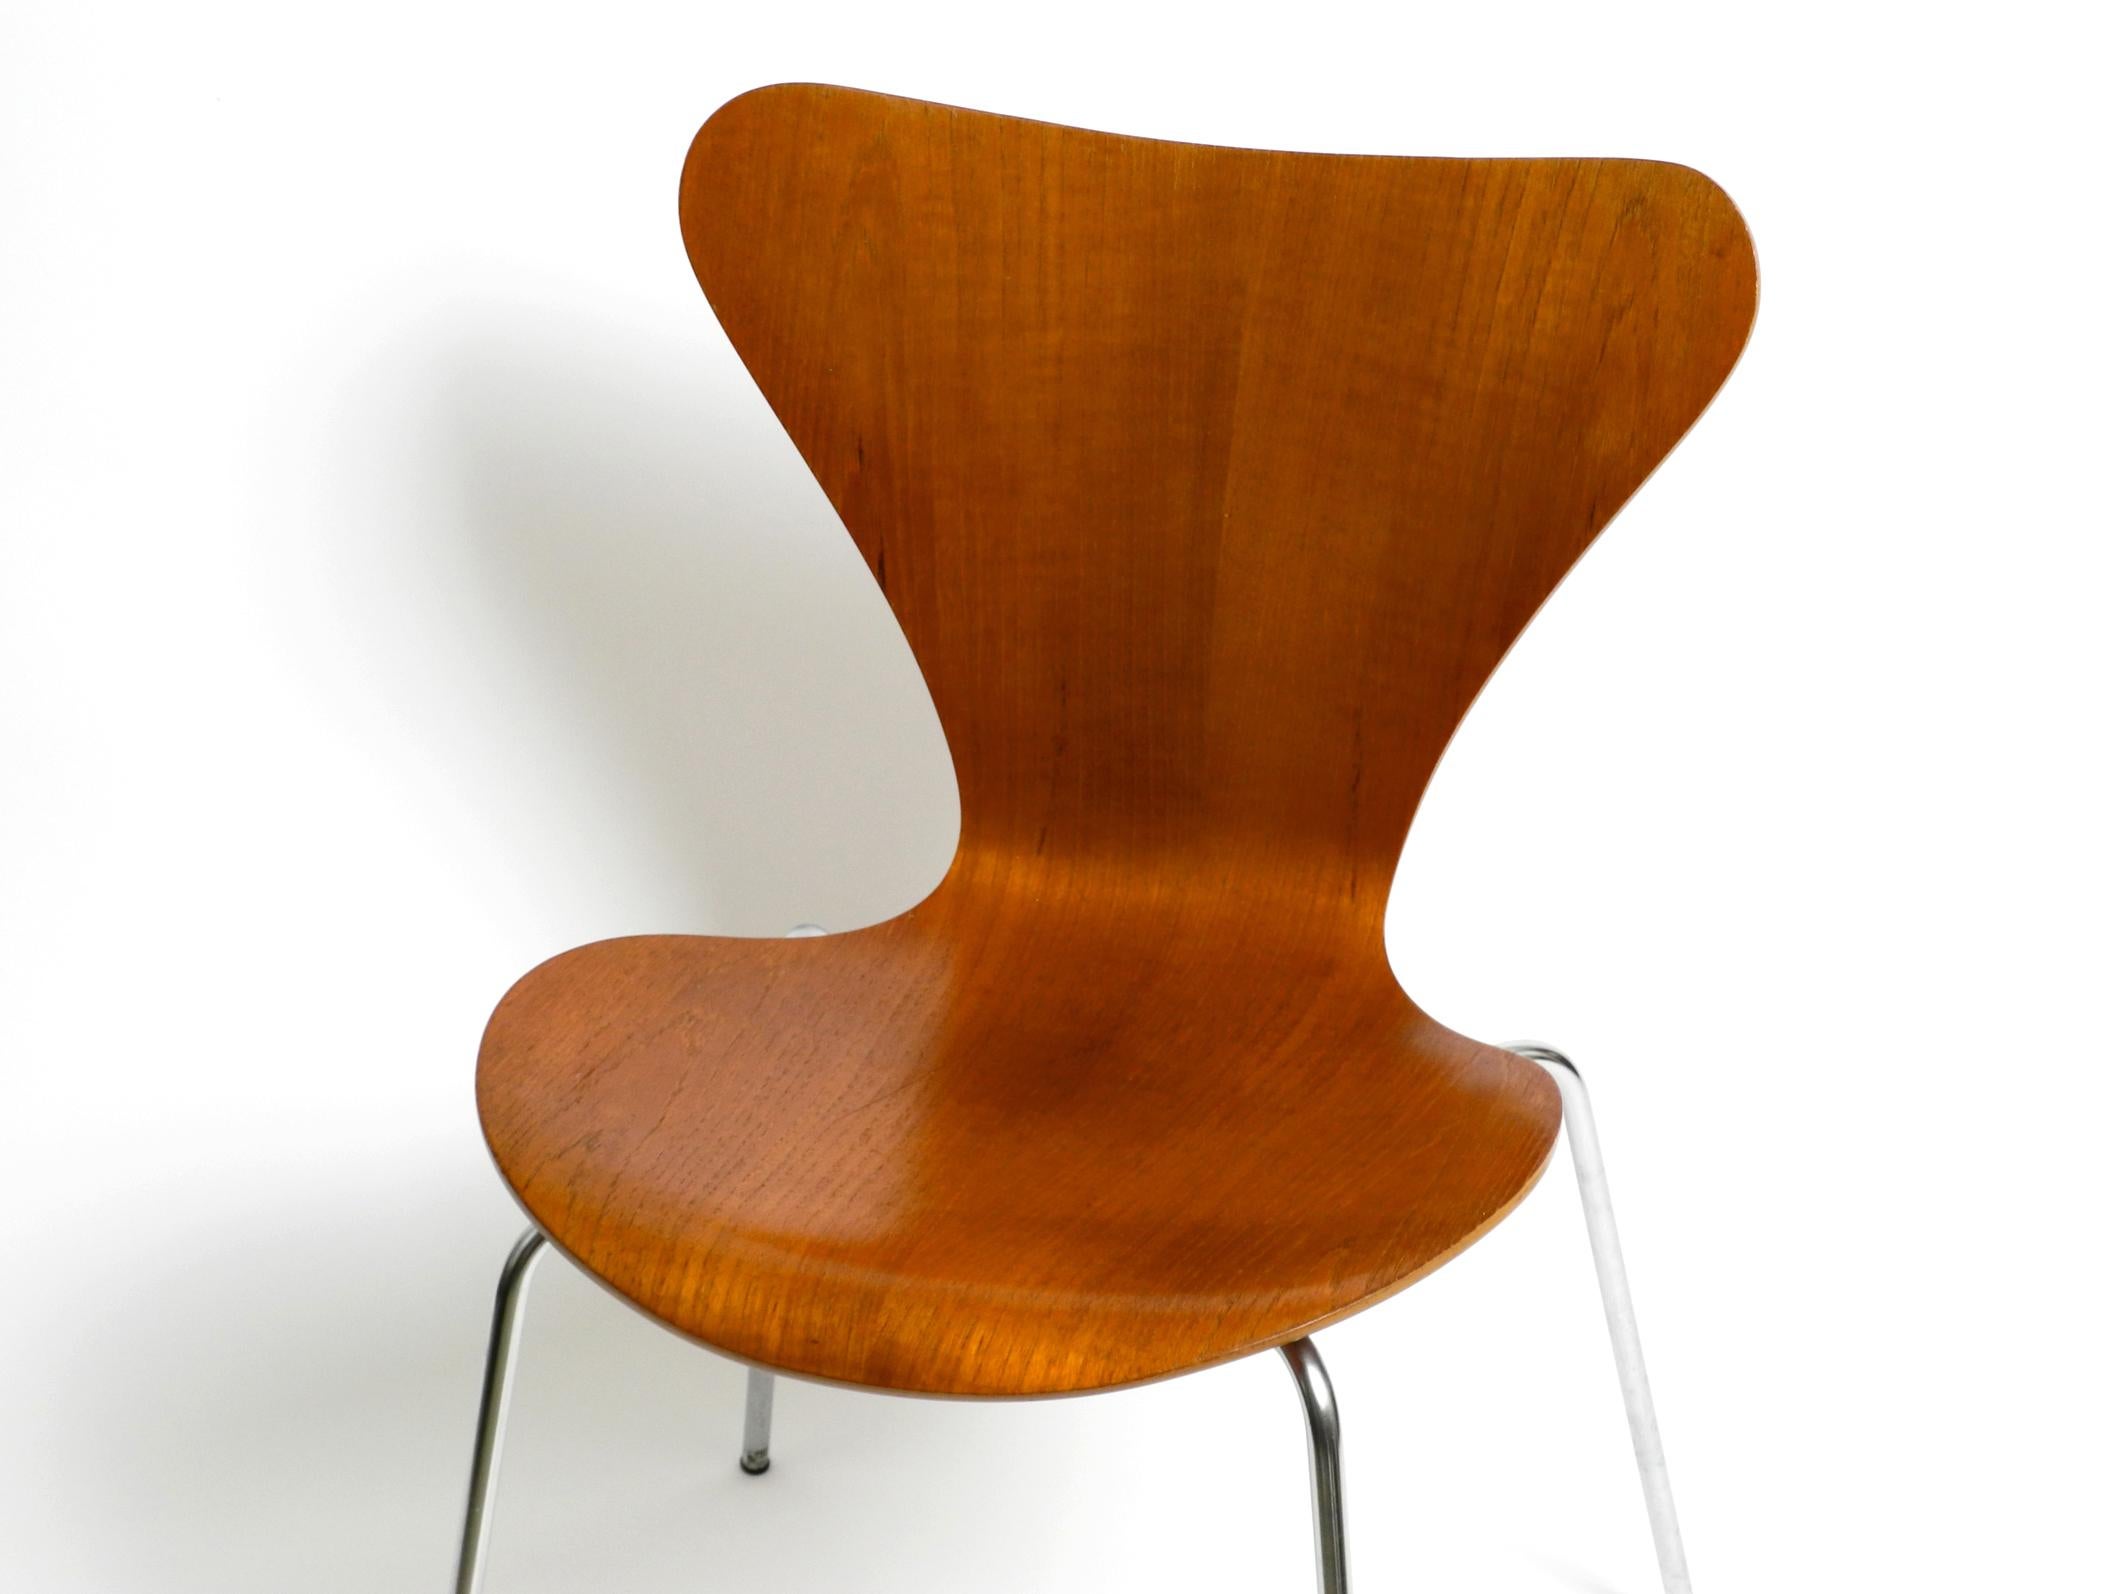 Danish Original Arne Jacobsen Teak Chair from 1972 Mod. 3107